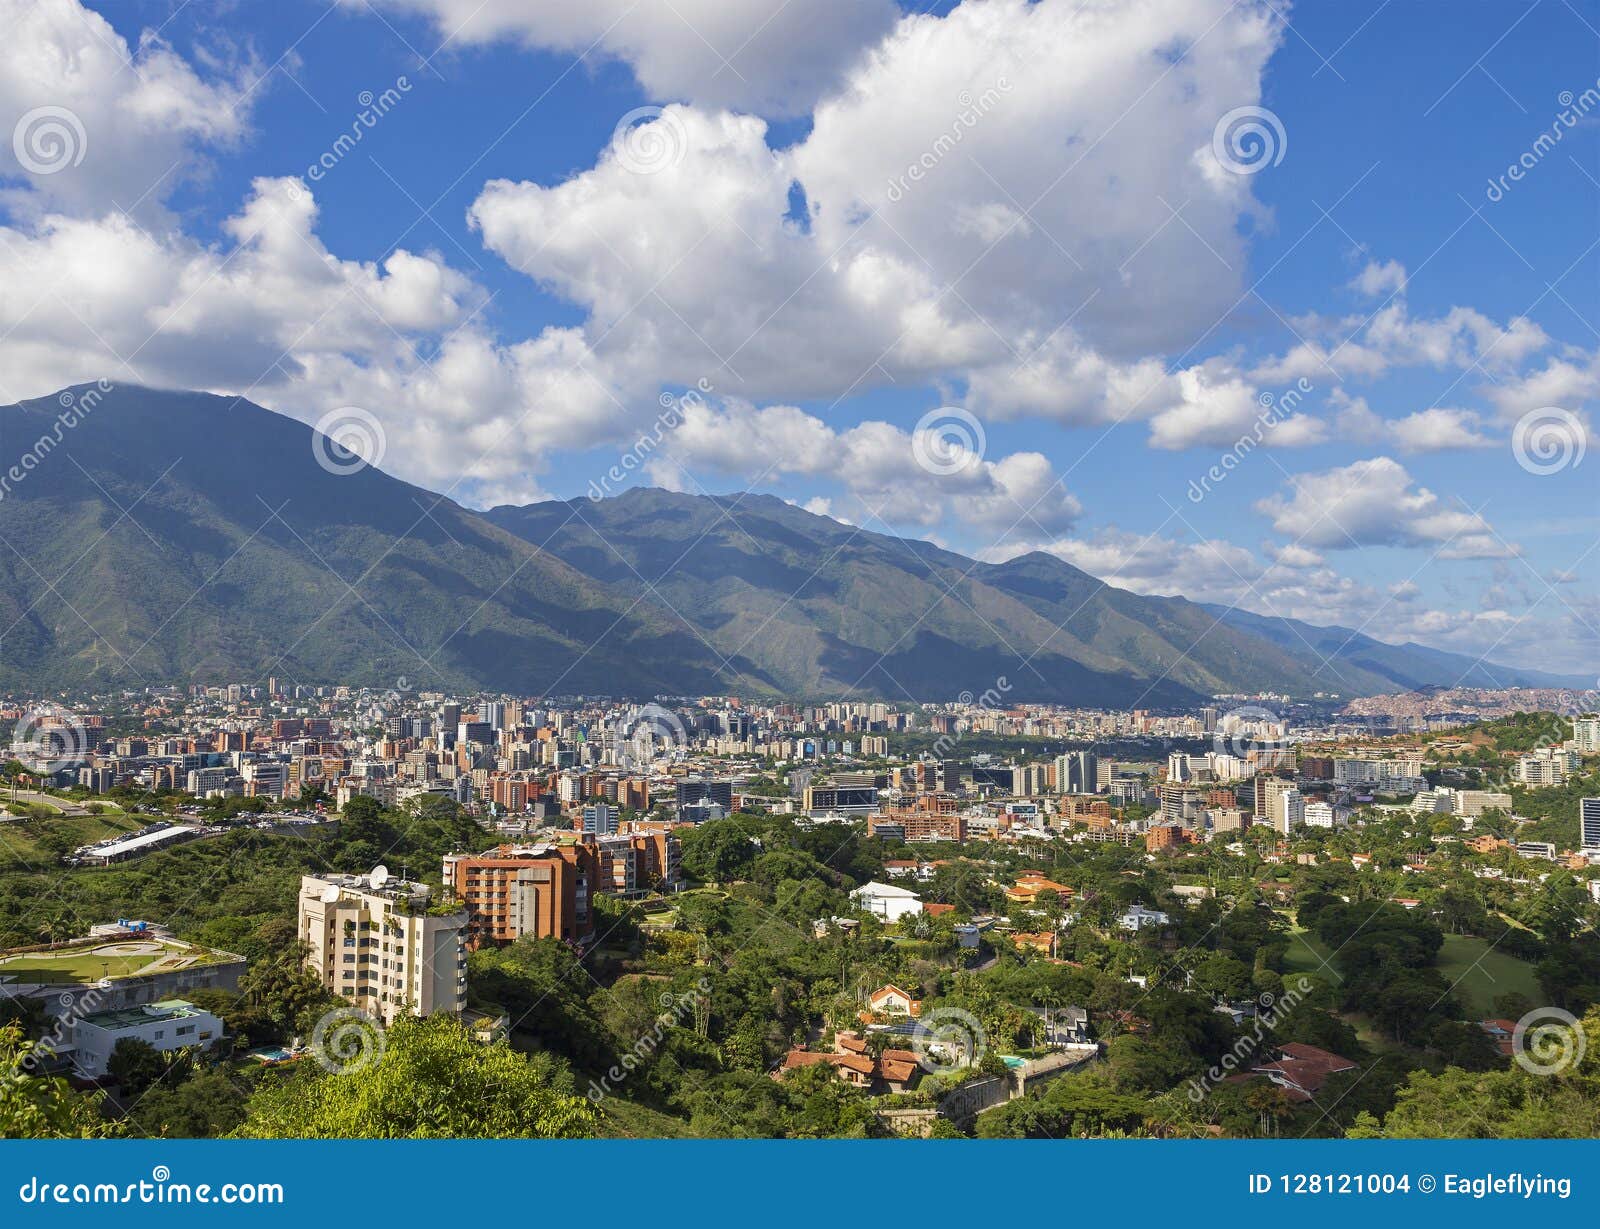 caracas, capital city of venezuela